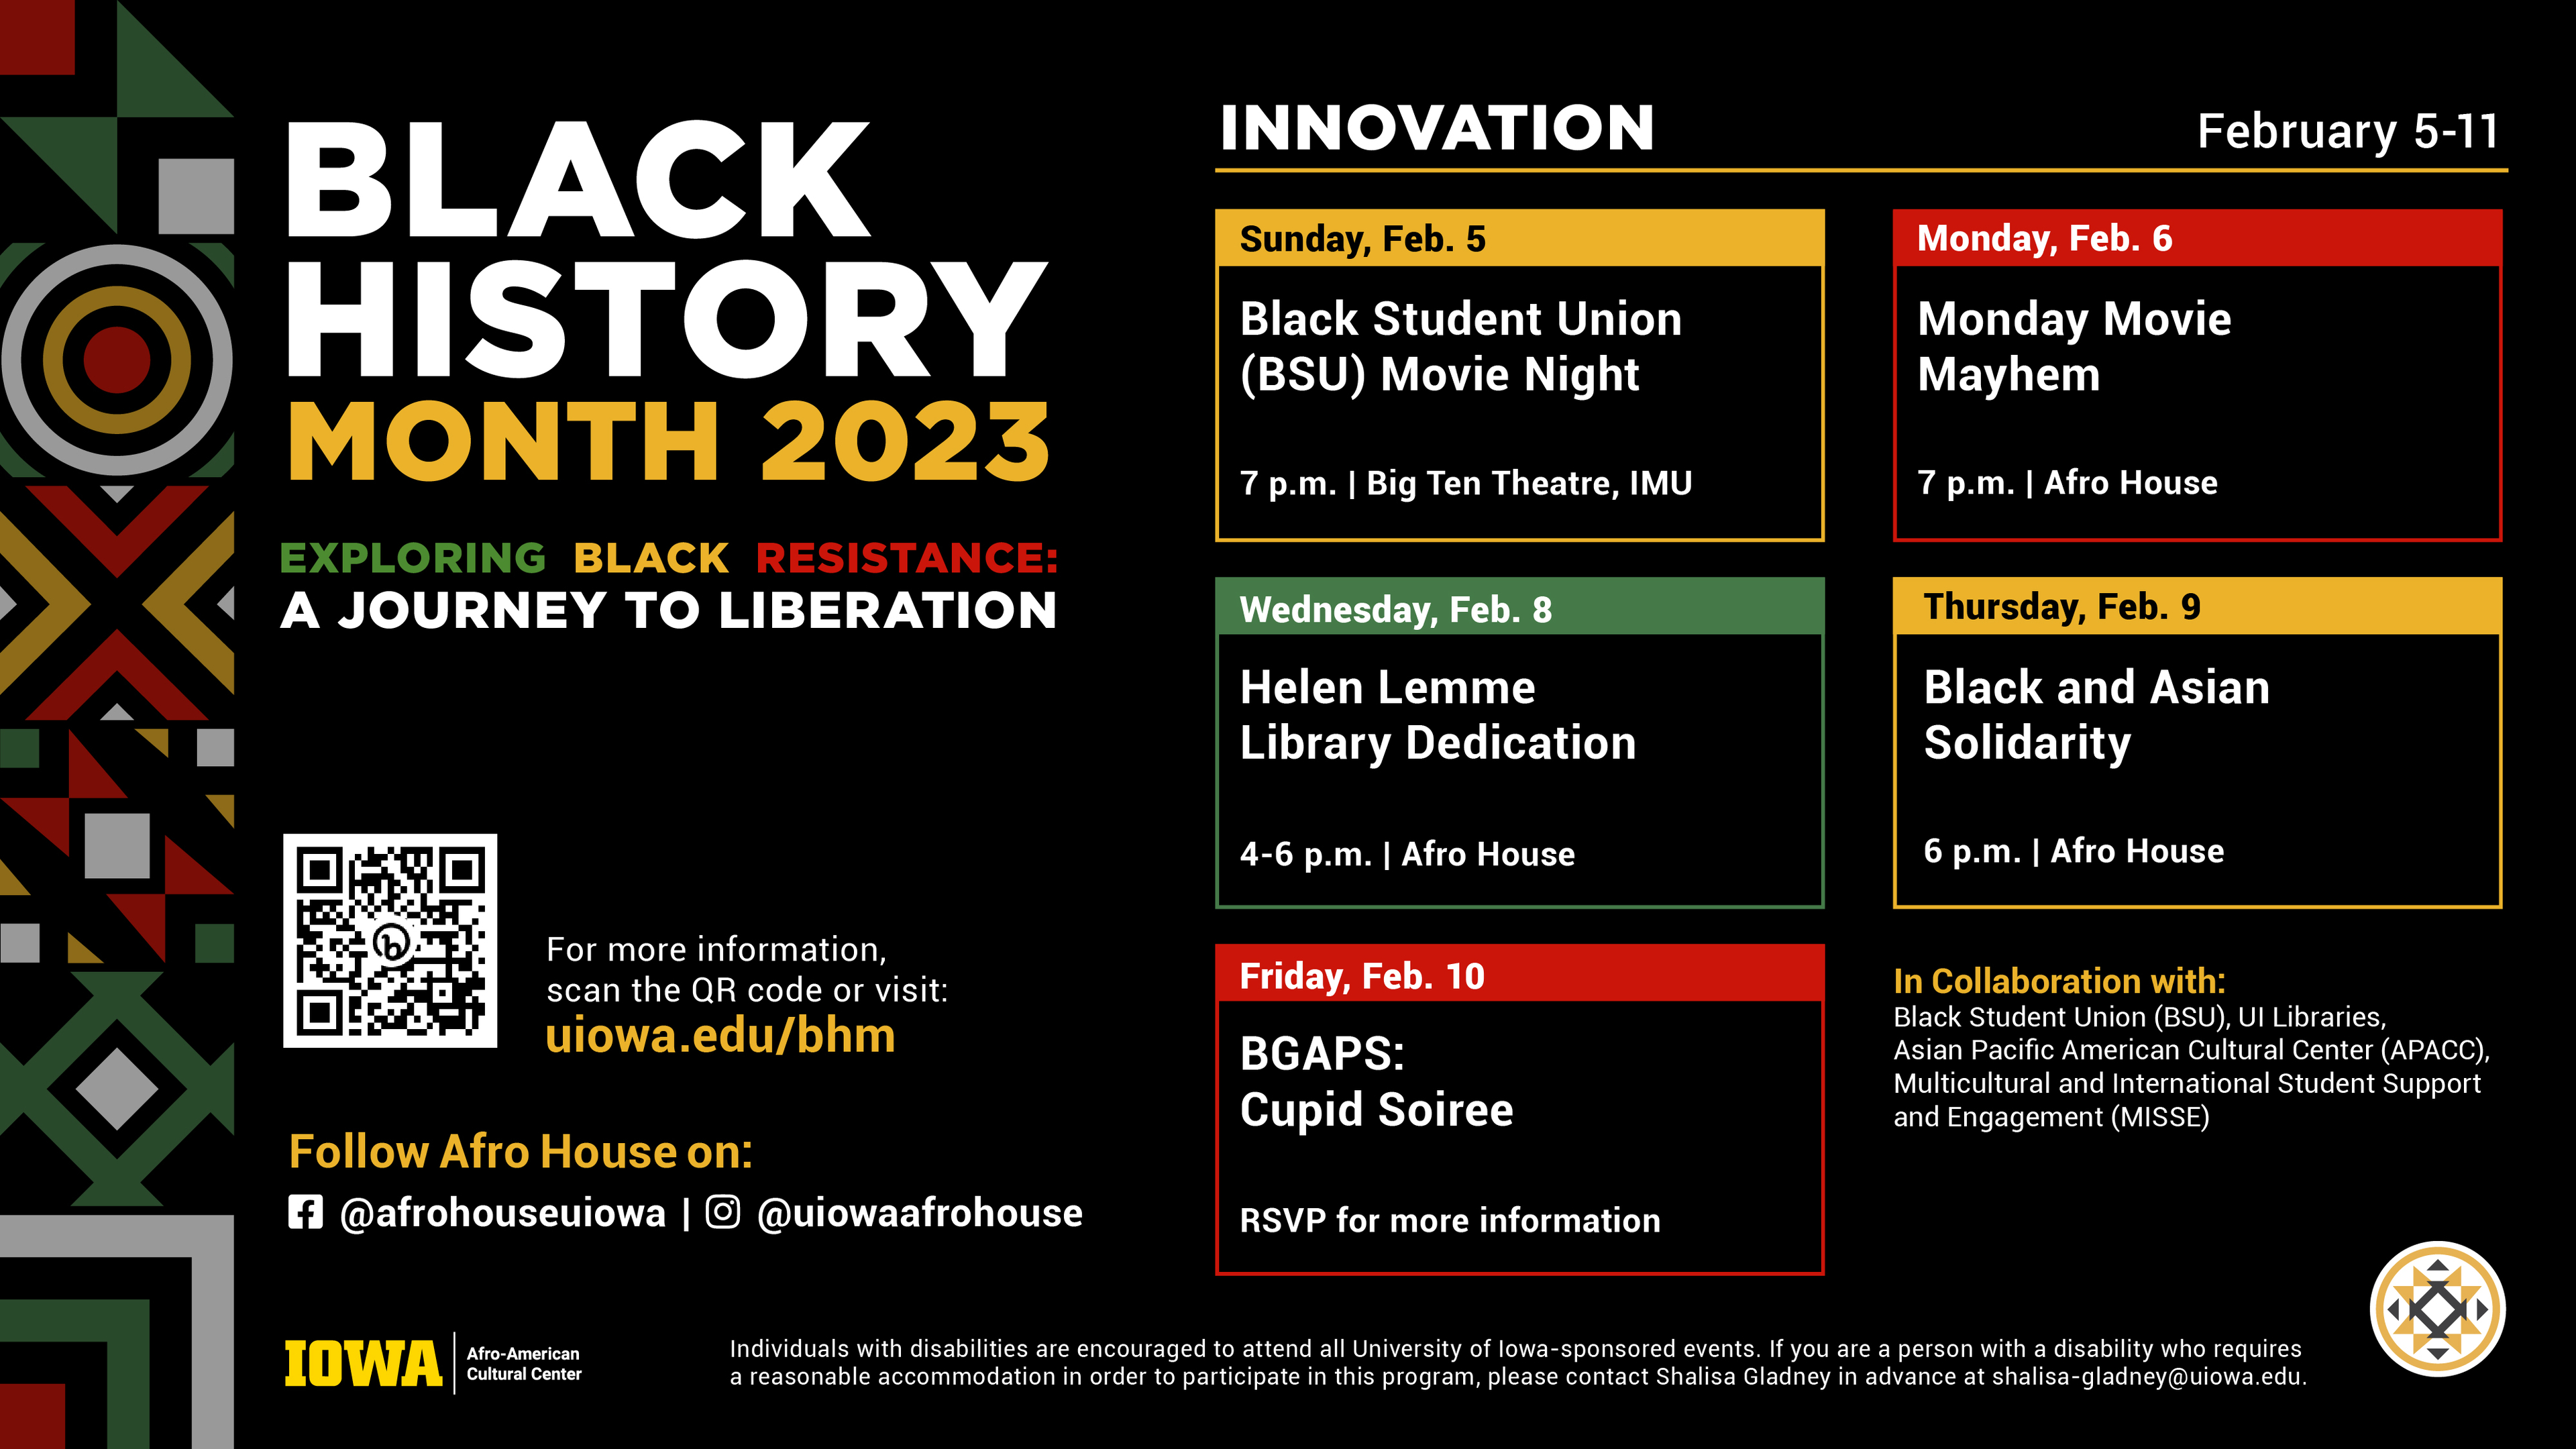 Black History Month 2023 For more information visit uiowa.edu/bhm